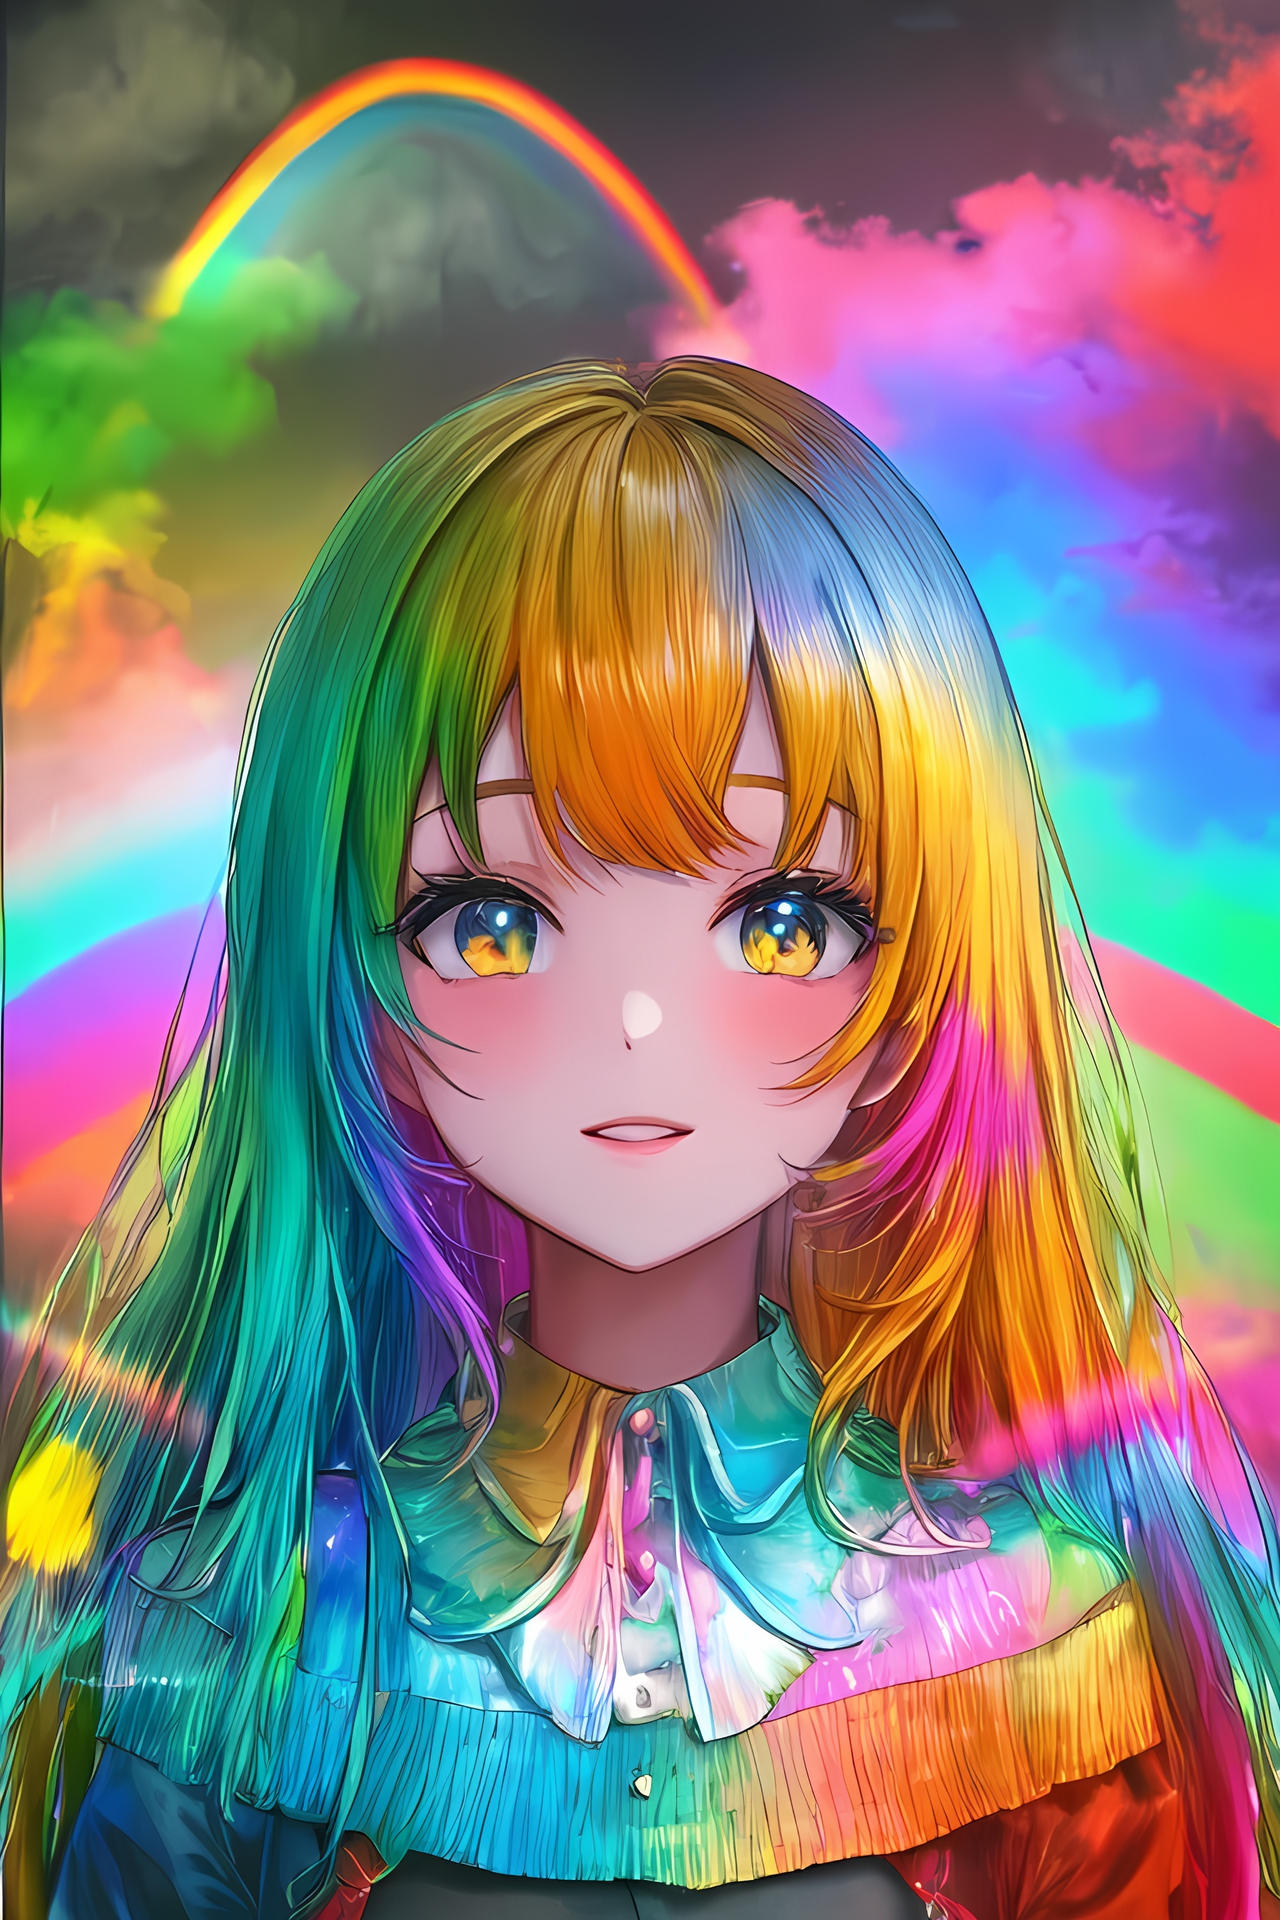 Cute anime girl by RainbowTalyaUnicorn on DeviantArt